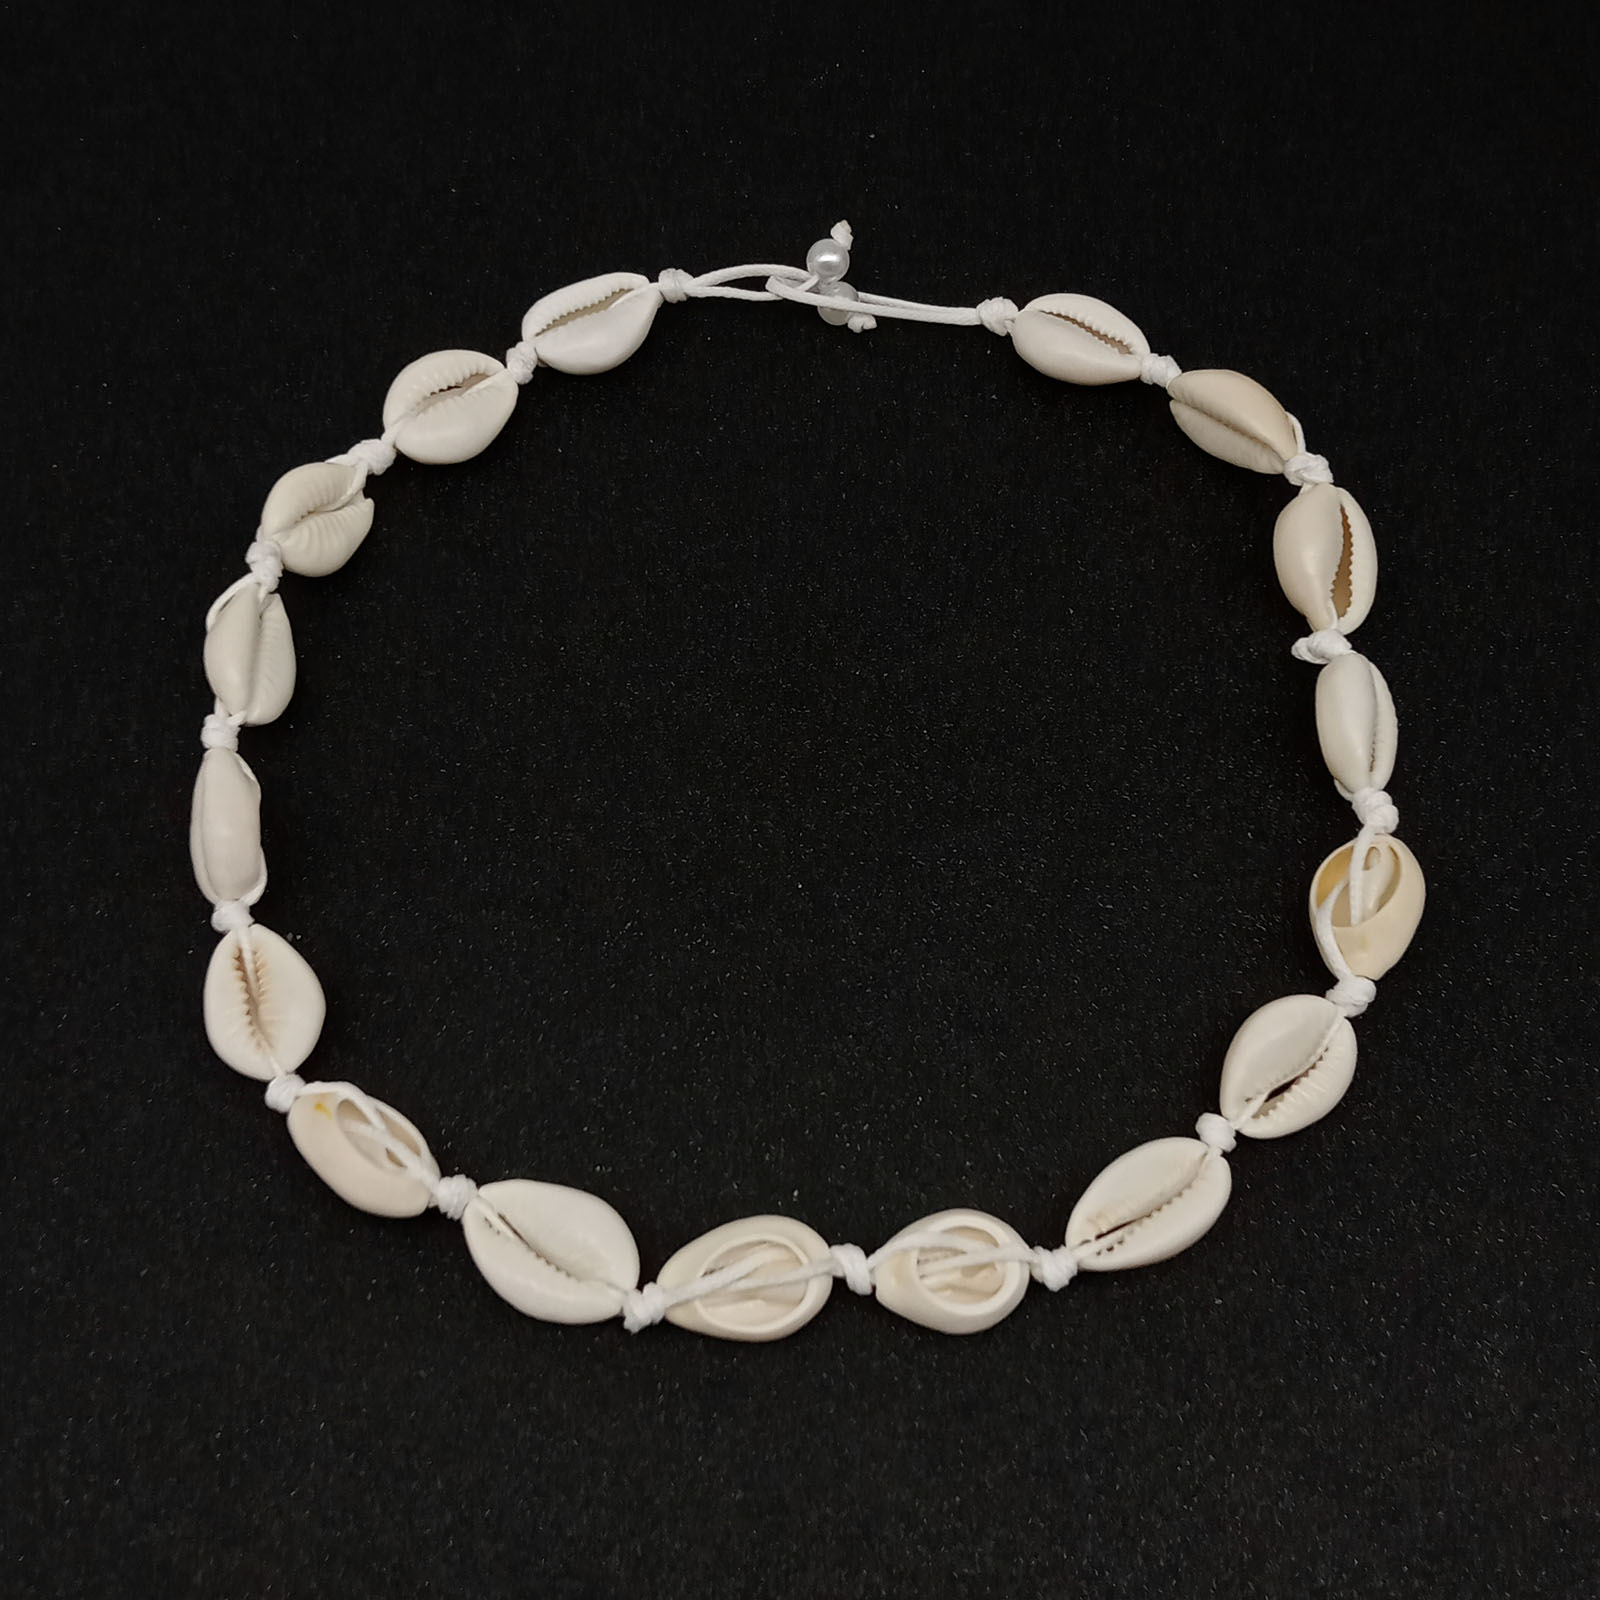 1:White rope+pearl shells